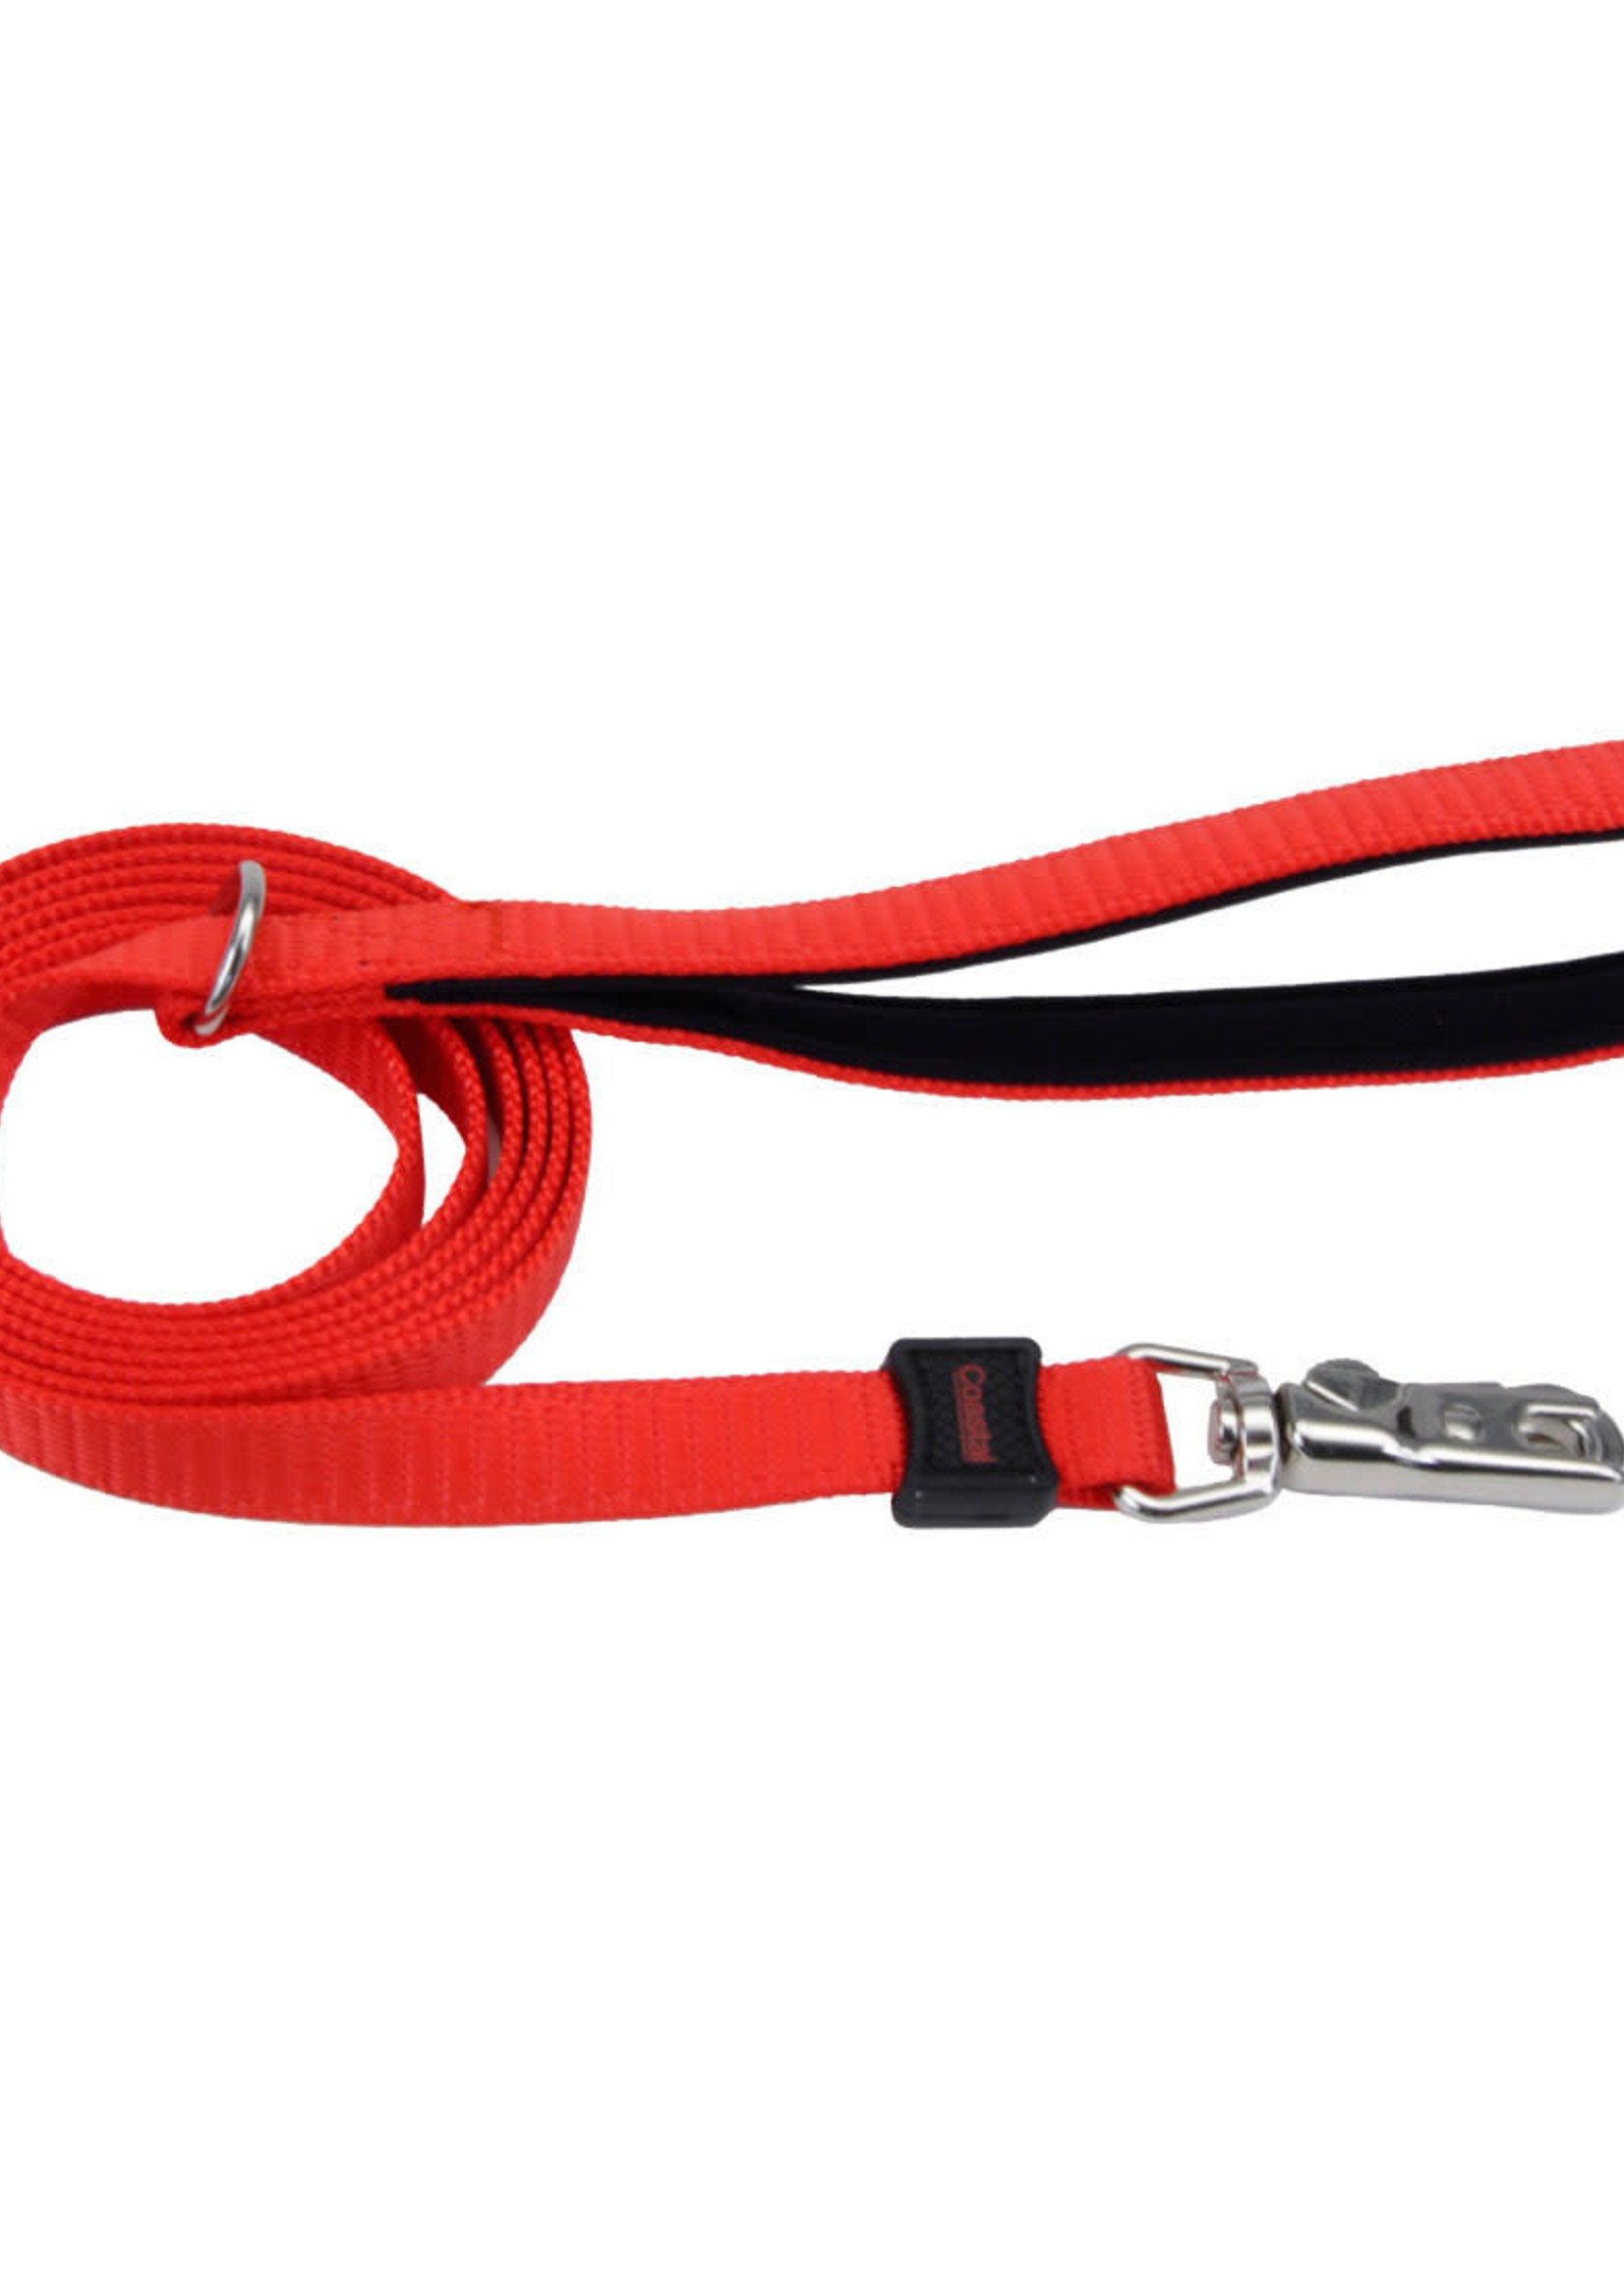 Coastal® Inspire Neoprene Leash 1"x6' Red